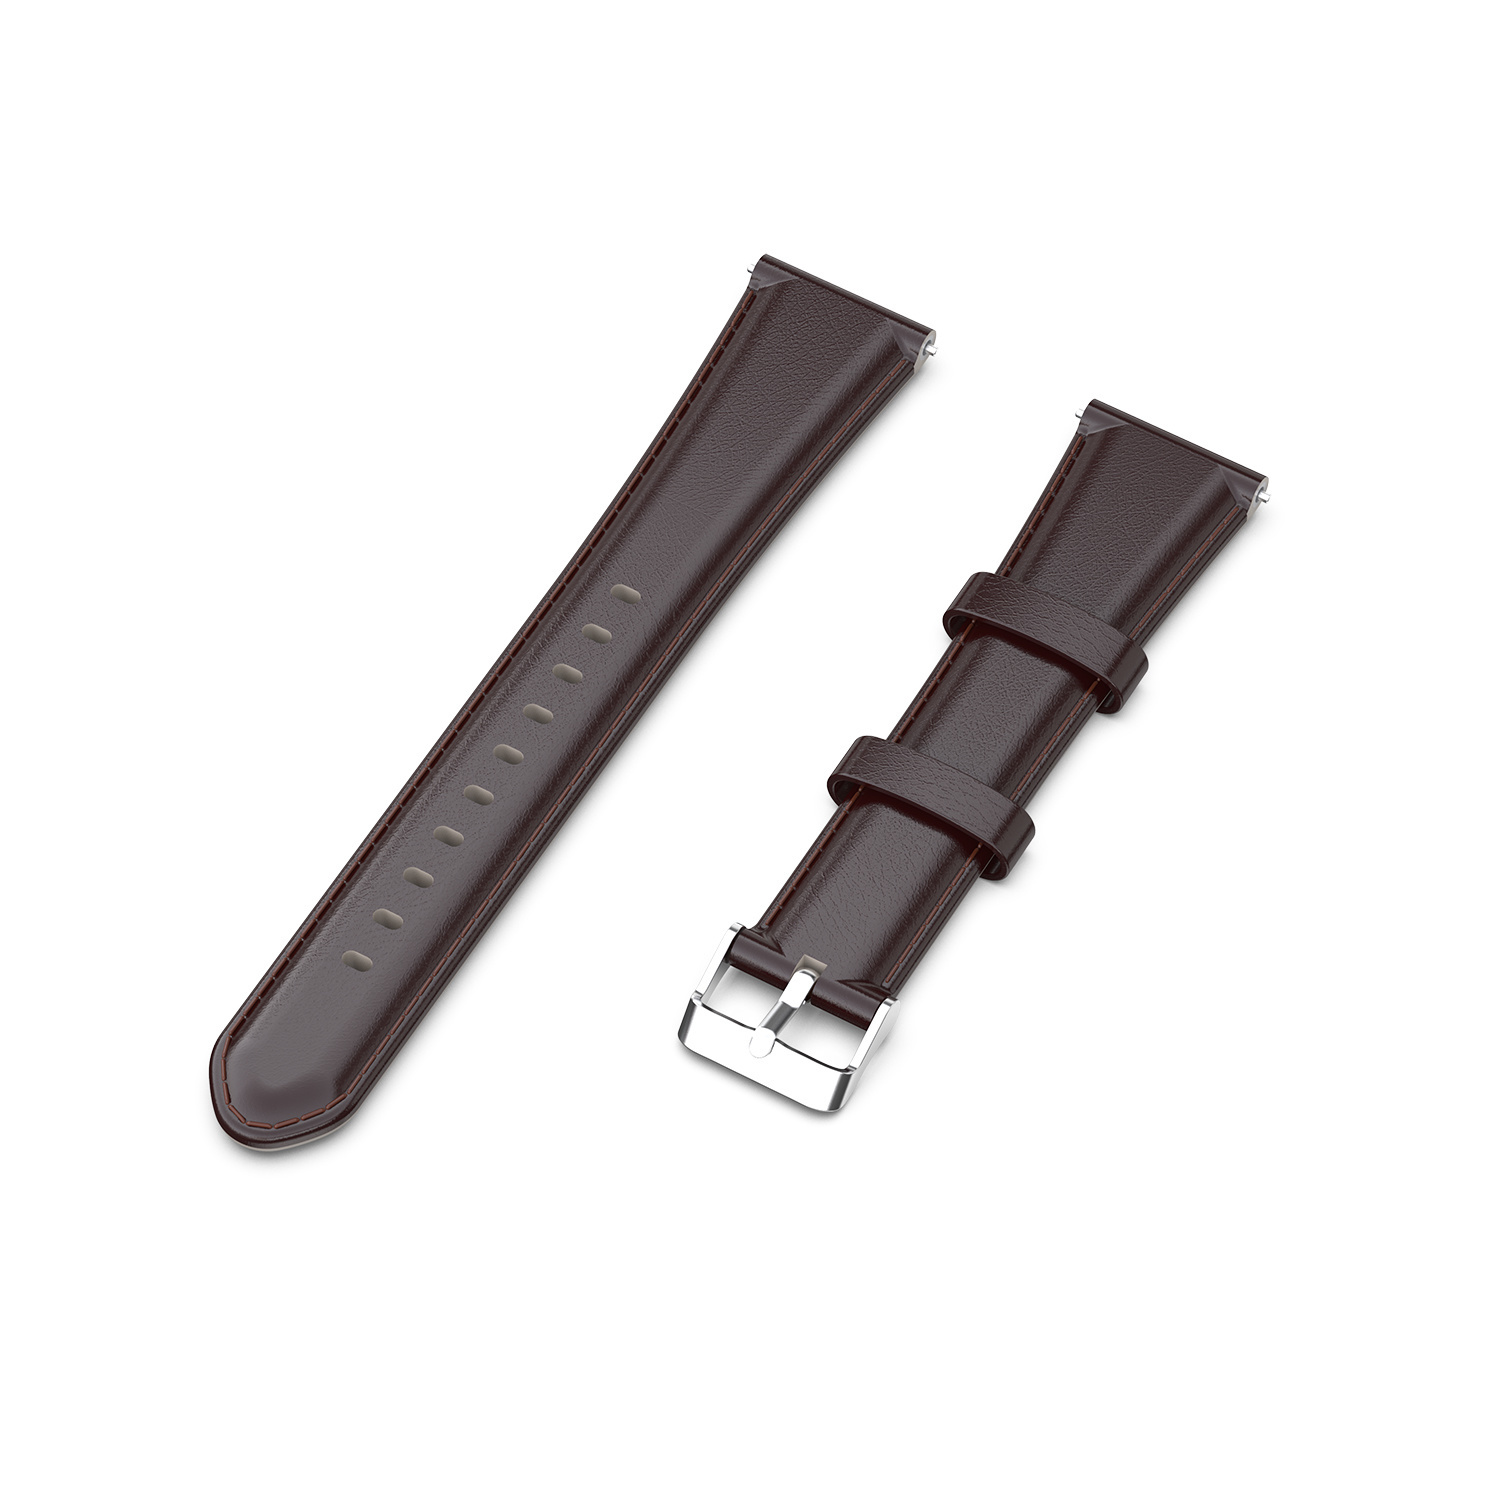 Cinturino in pelle per Samsung Galaxy Watch - marrone scuro